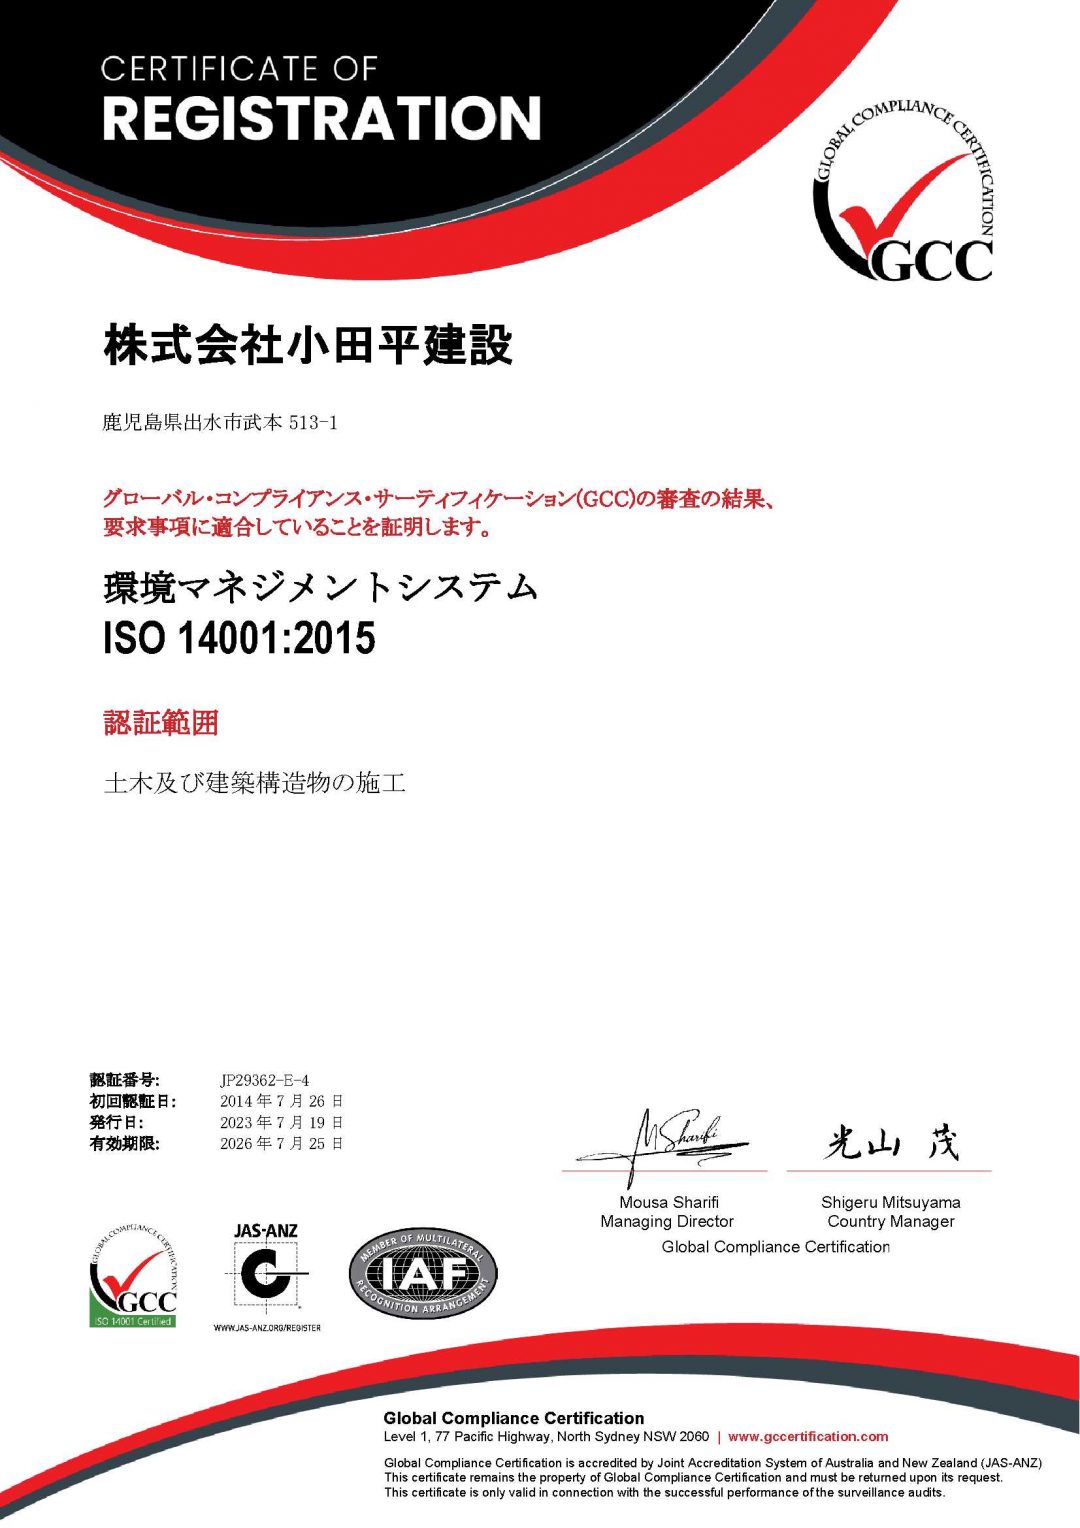 GCC-JP 認証書 ISO 14001 - 2022 - JP29362-E-4 - 株式会社小田平建設様_1